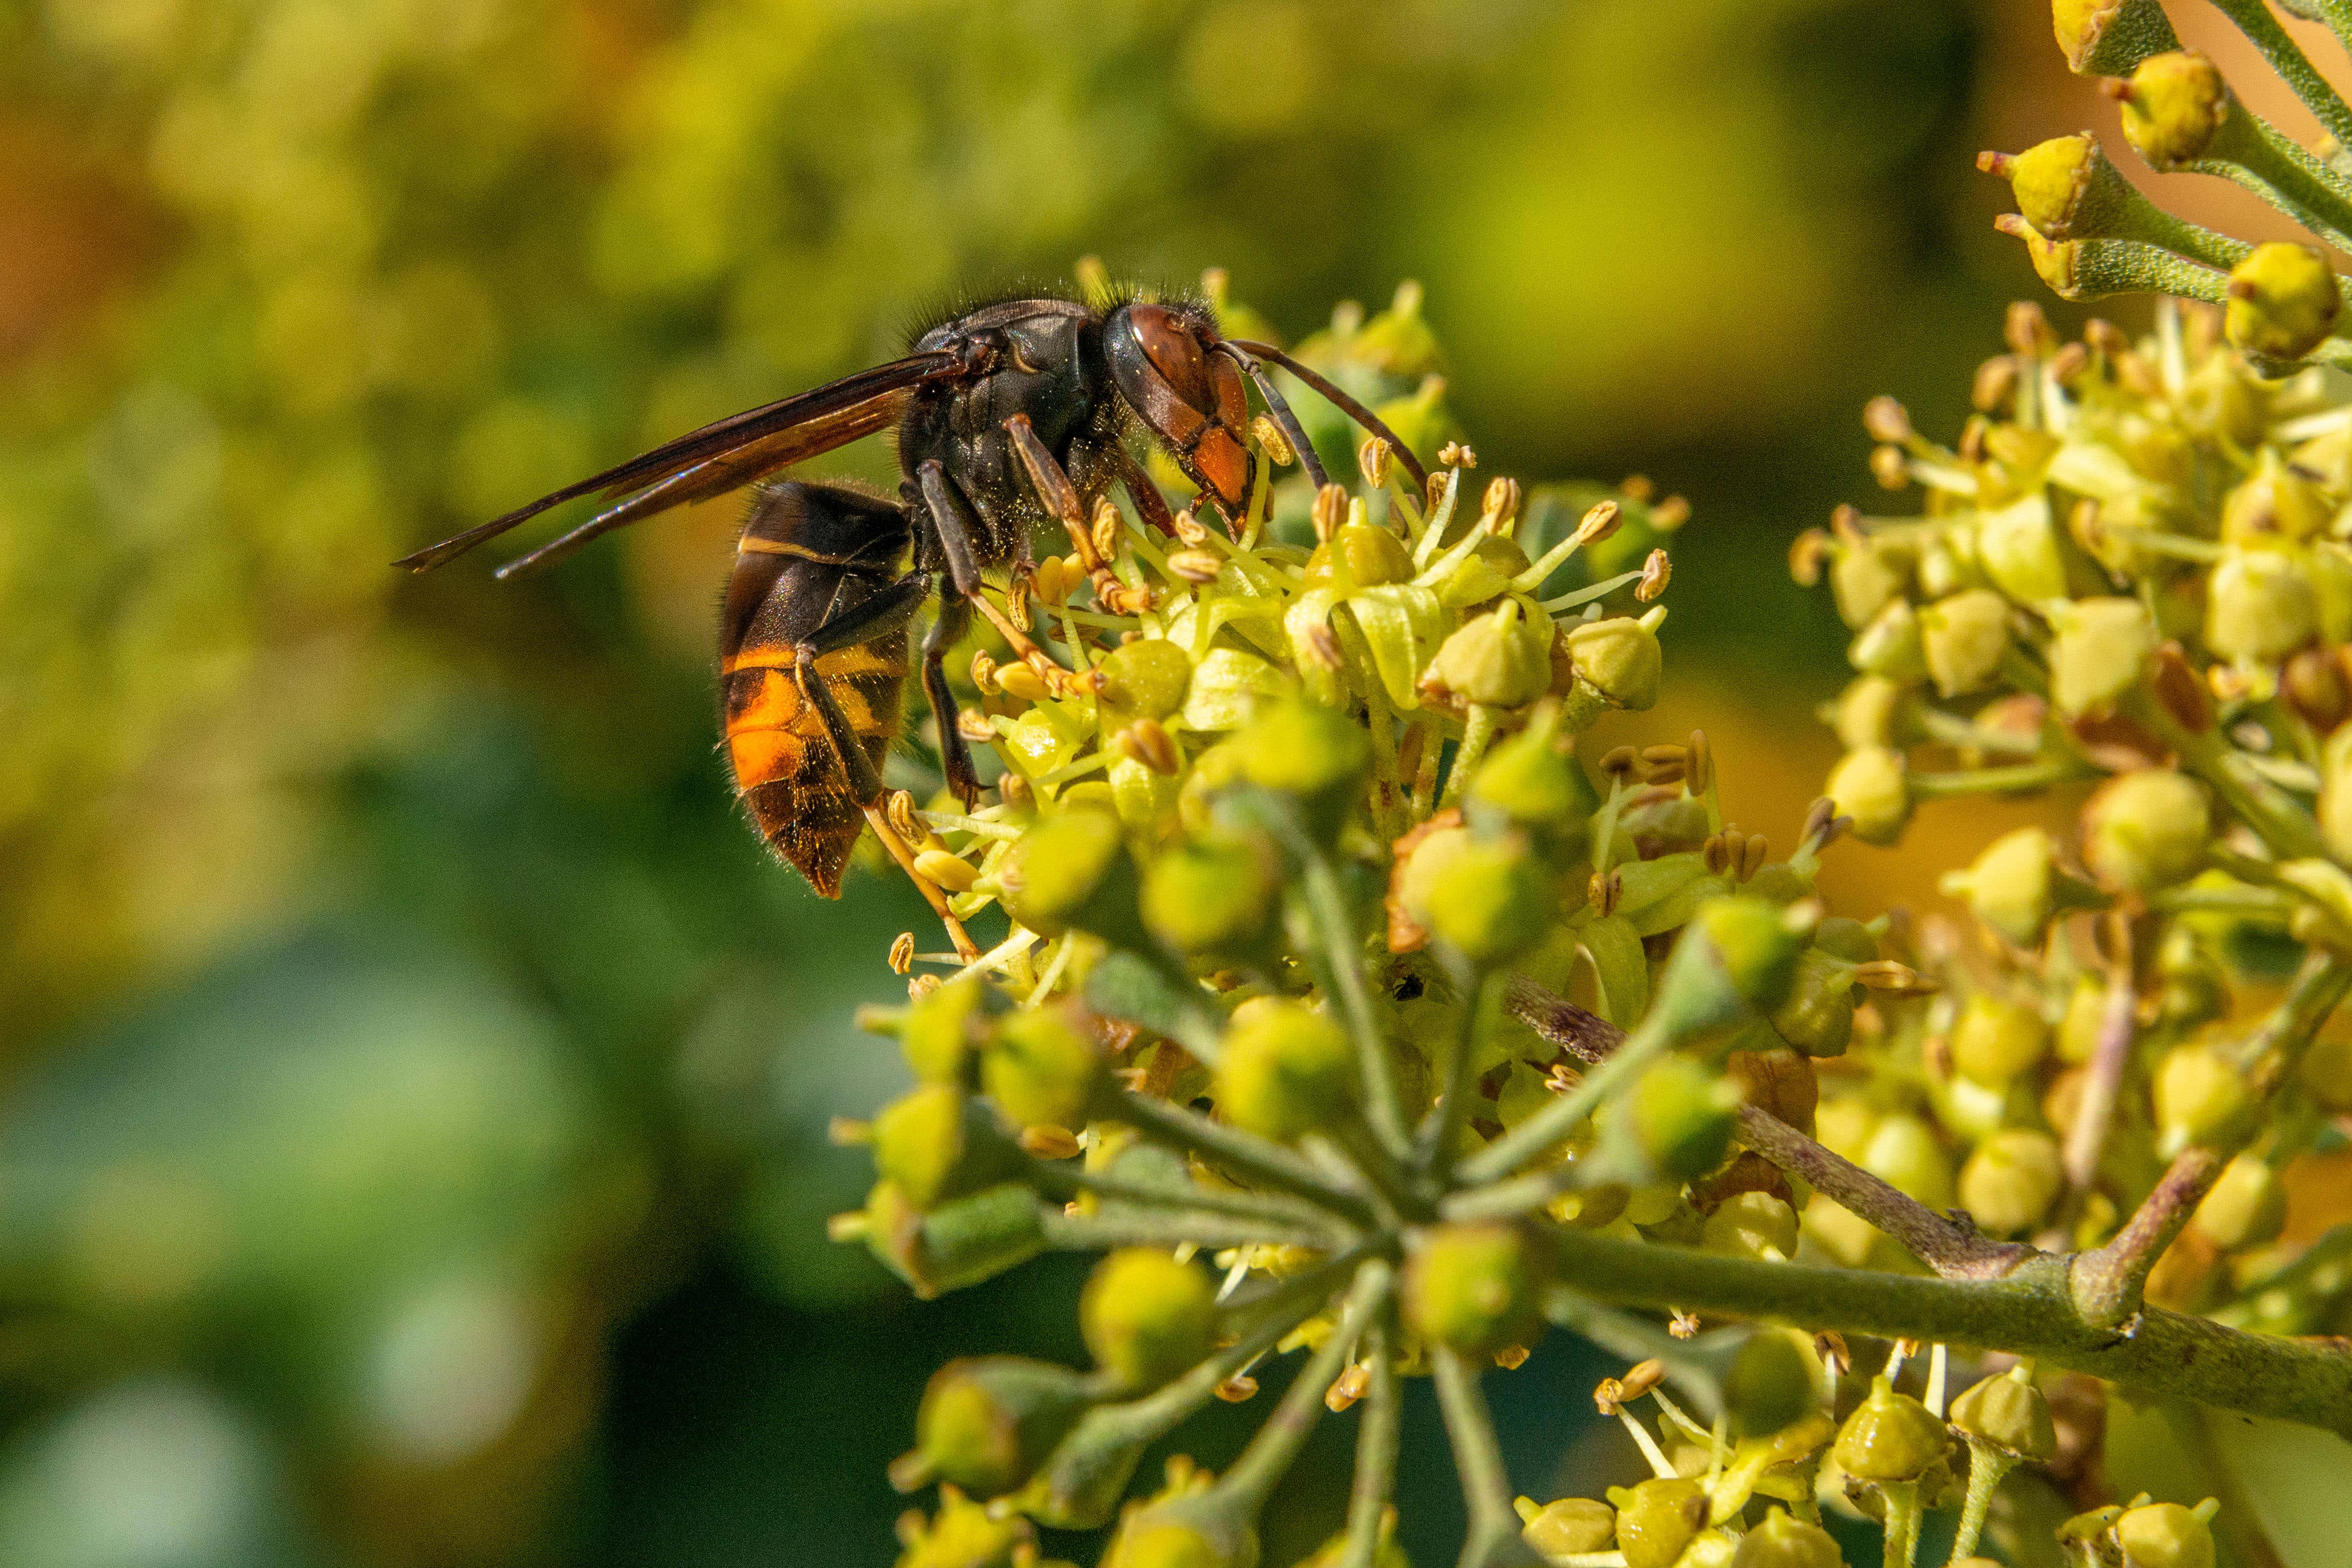 An Asian hornet taking nectar from an Ivy flower head (Alamy/PA)